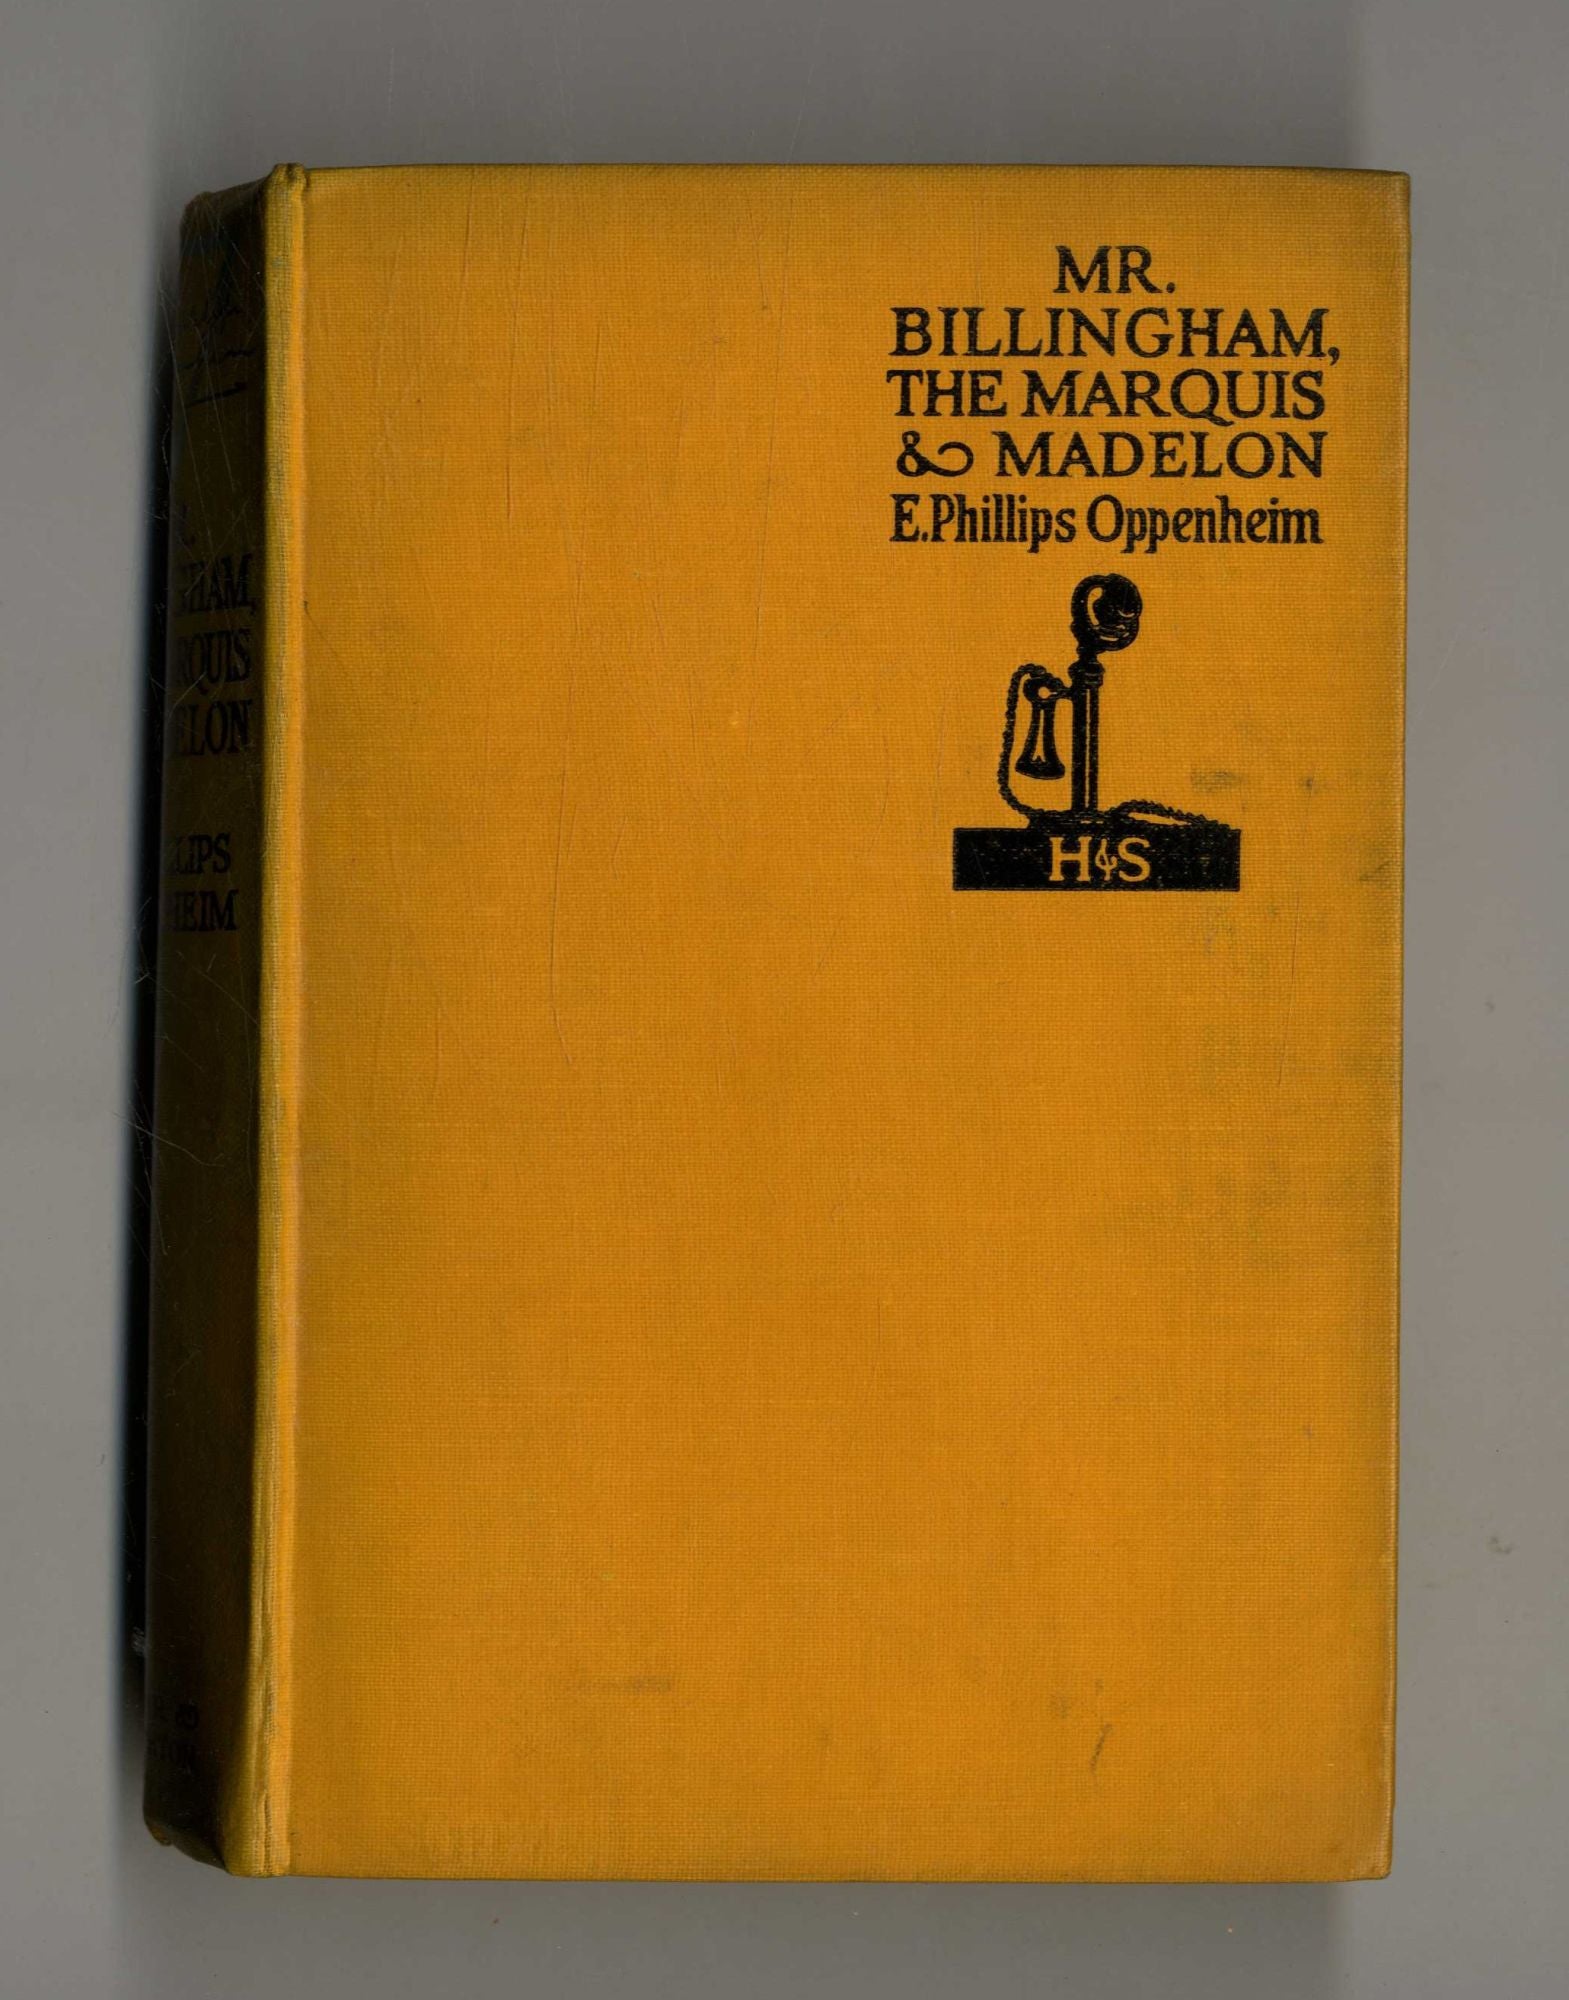 Book #160089 Mr. Billingham, the Marquis and Madelon. E. Phillips Oppenheim.